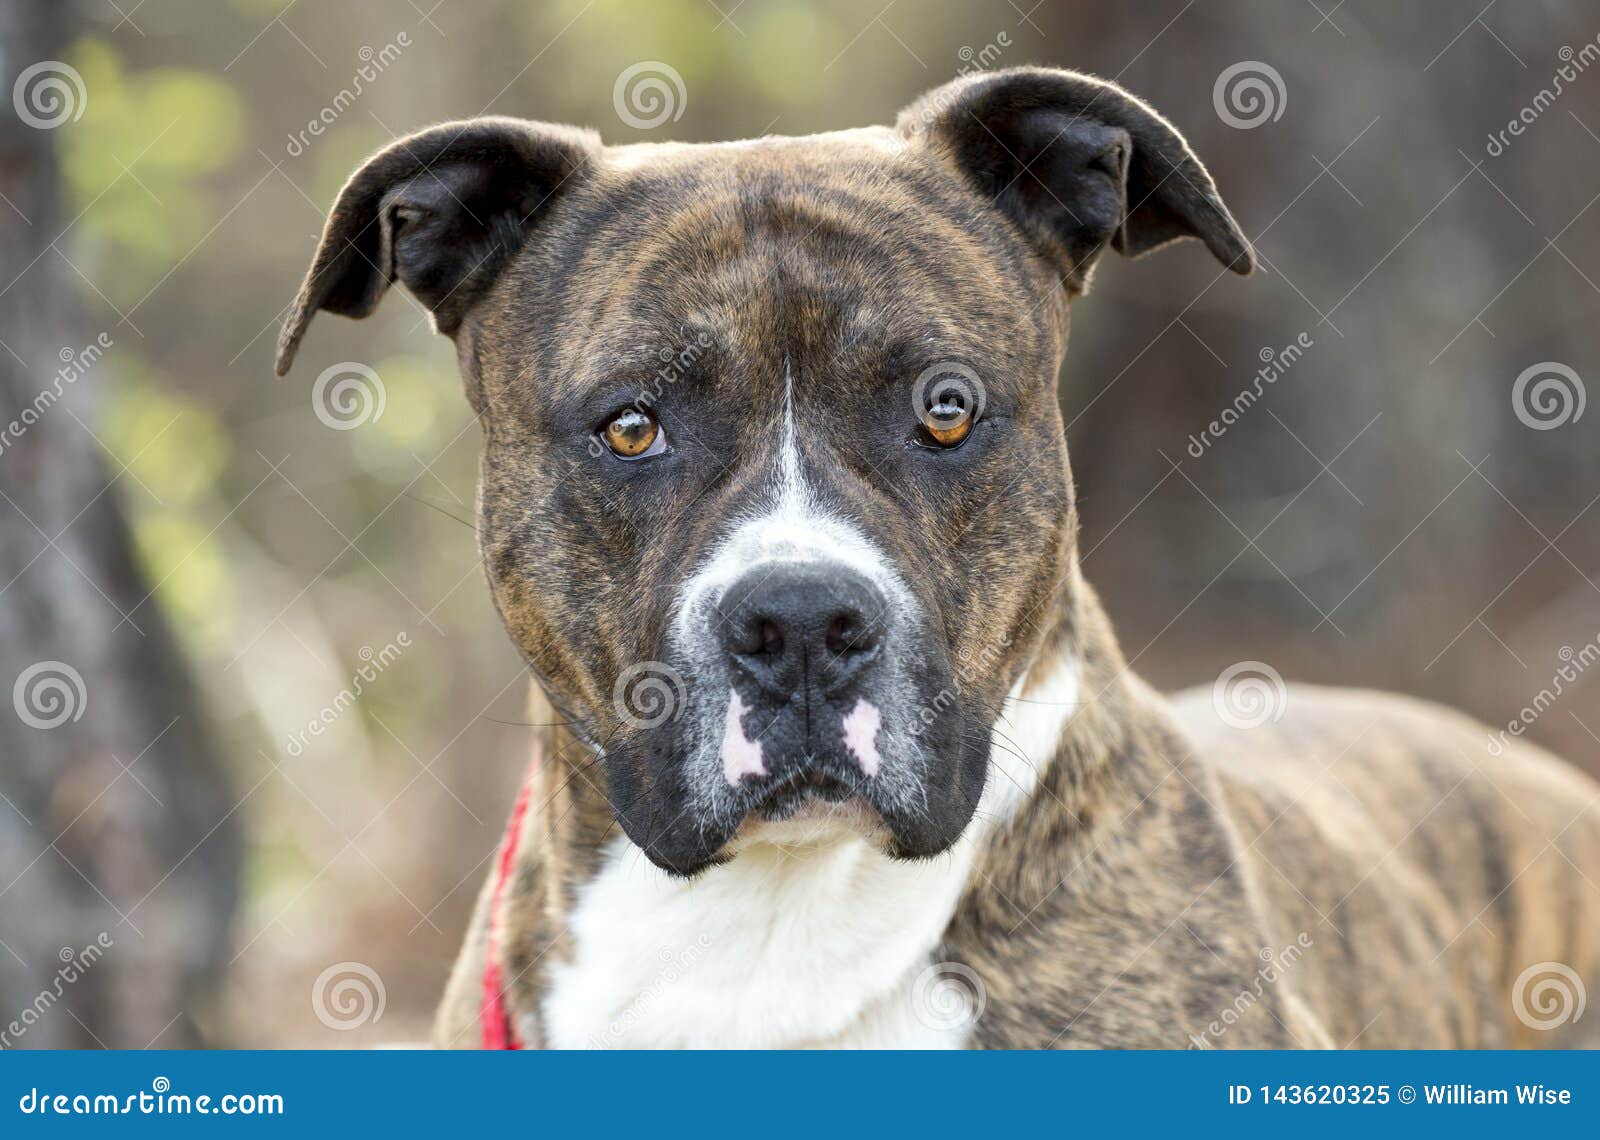 Antagelser, antagelser. Gætte Predictor Ofte talt Brindle Mastiff and American Bulldog Mix Breed Dog Stock Image - Image of  american, county: 143620325